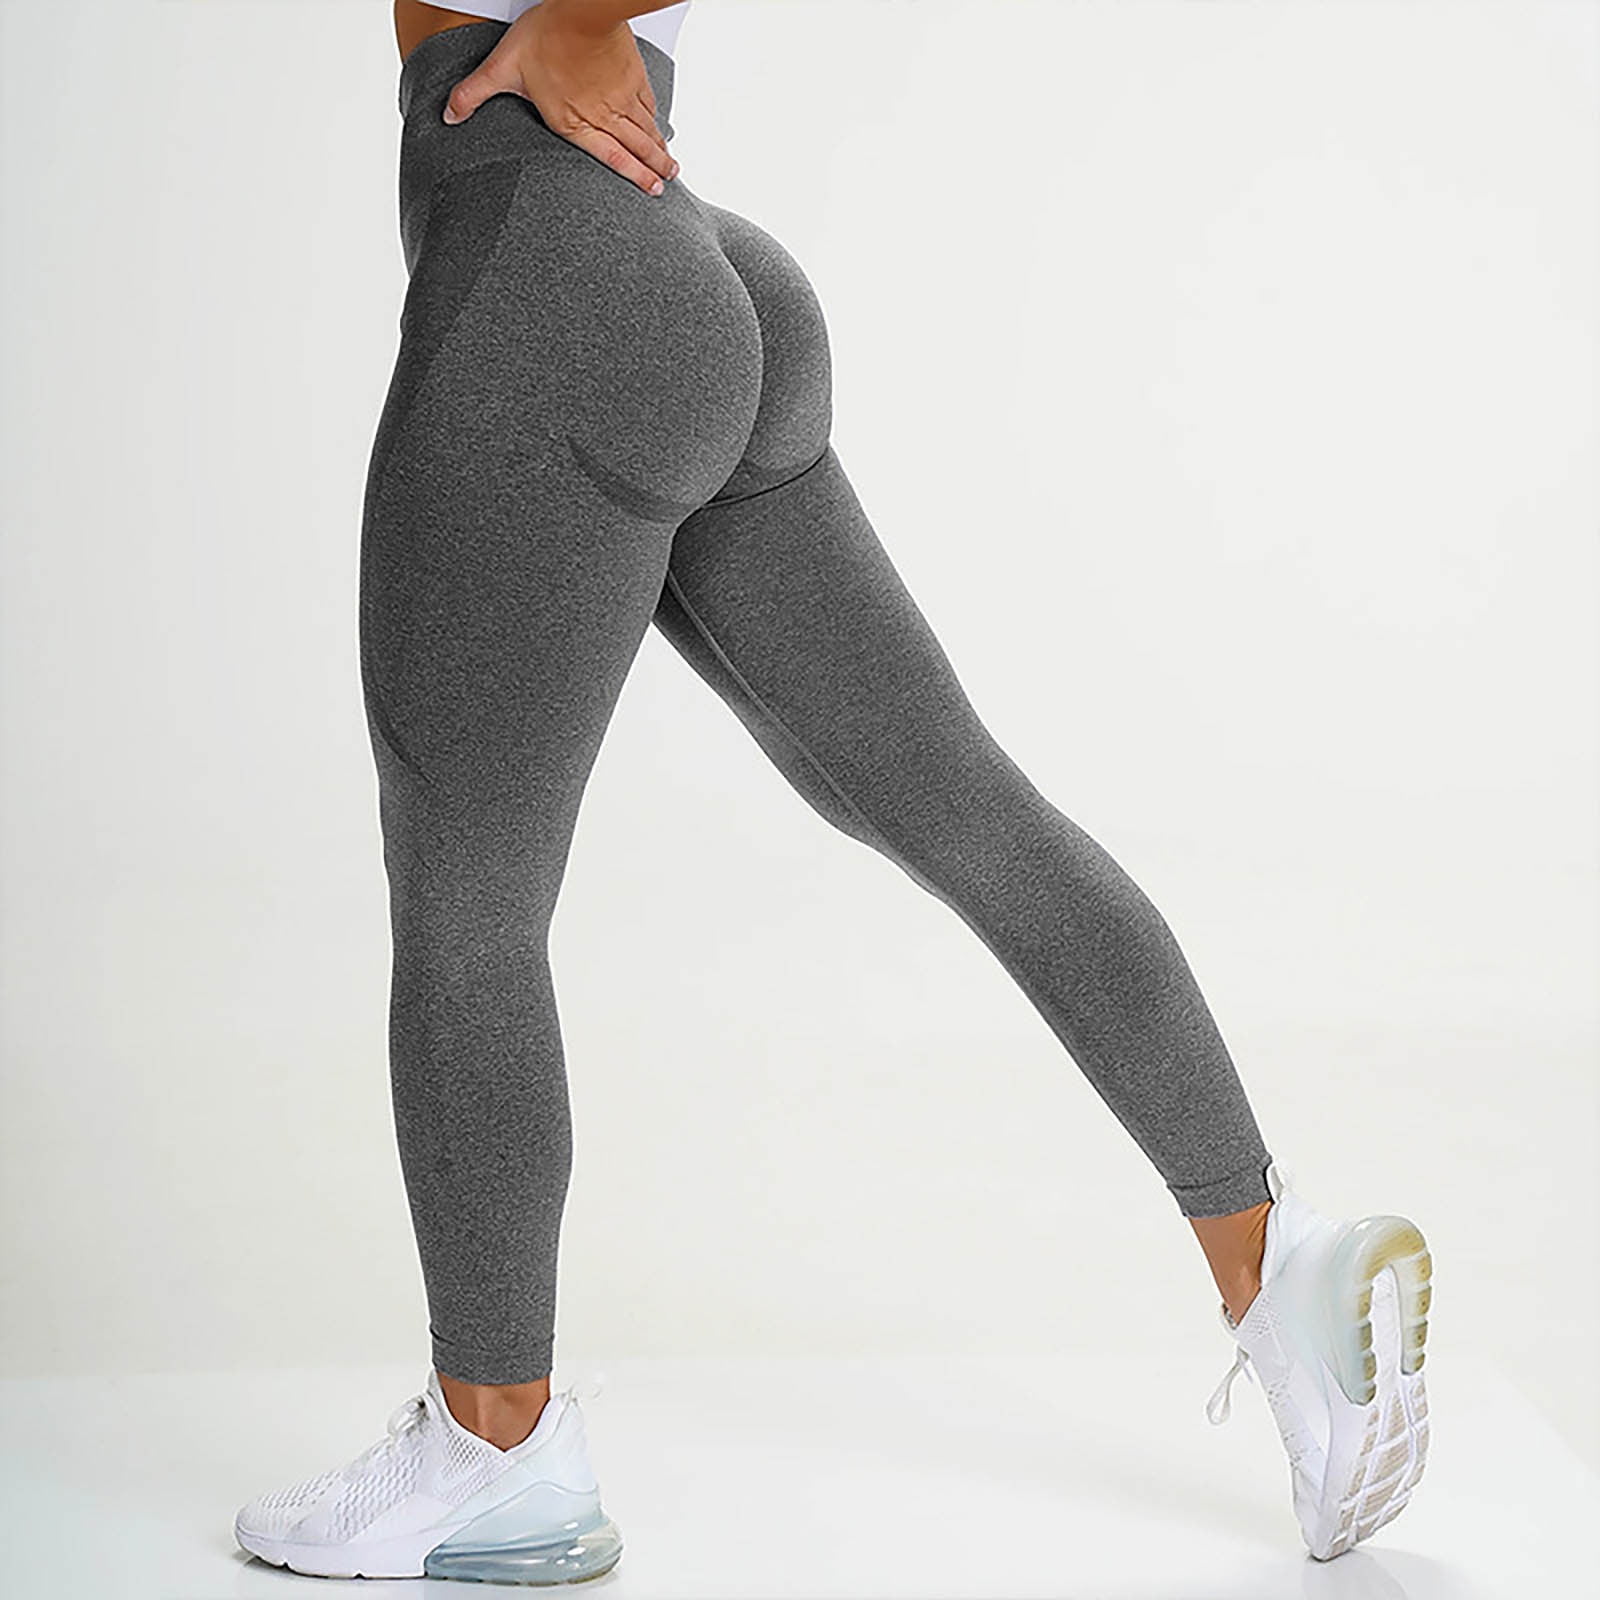 Yoga Pants SHOPESSA Seamless Butt Lifting Workout Leggings for